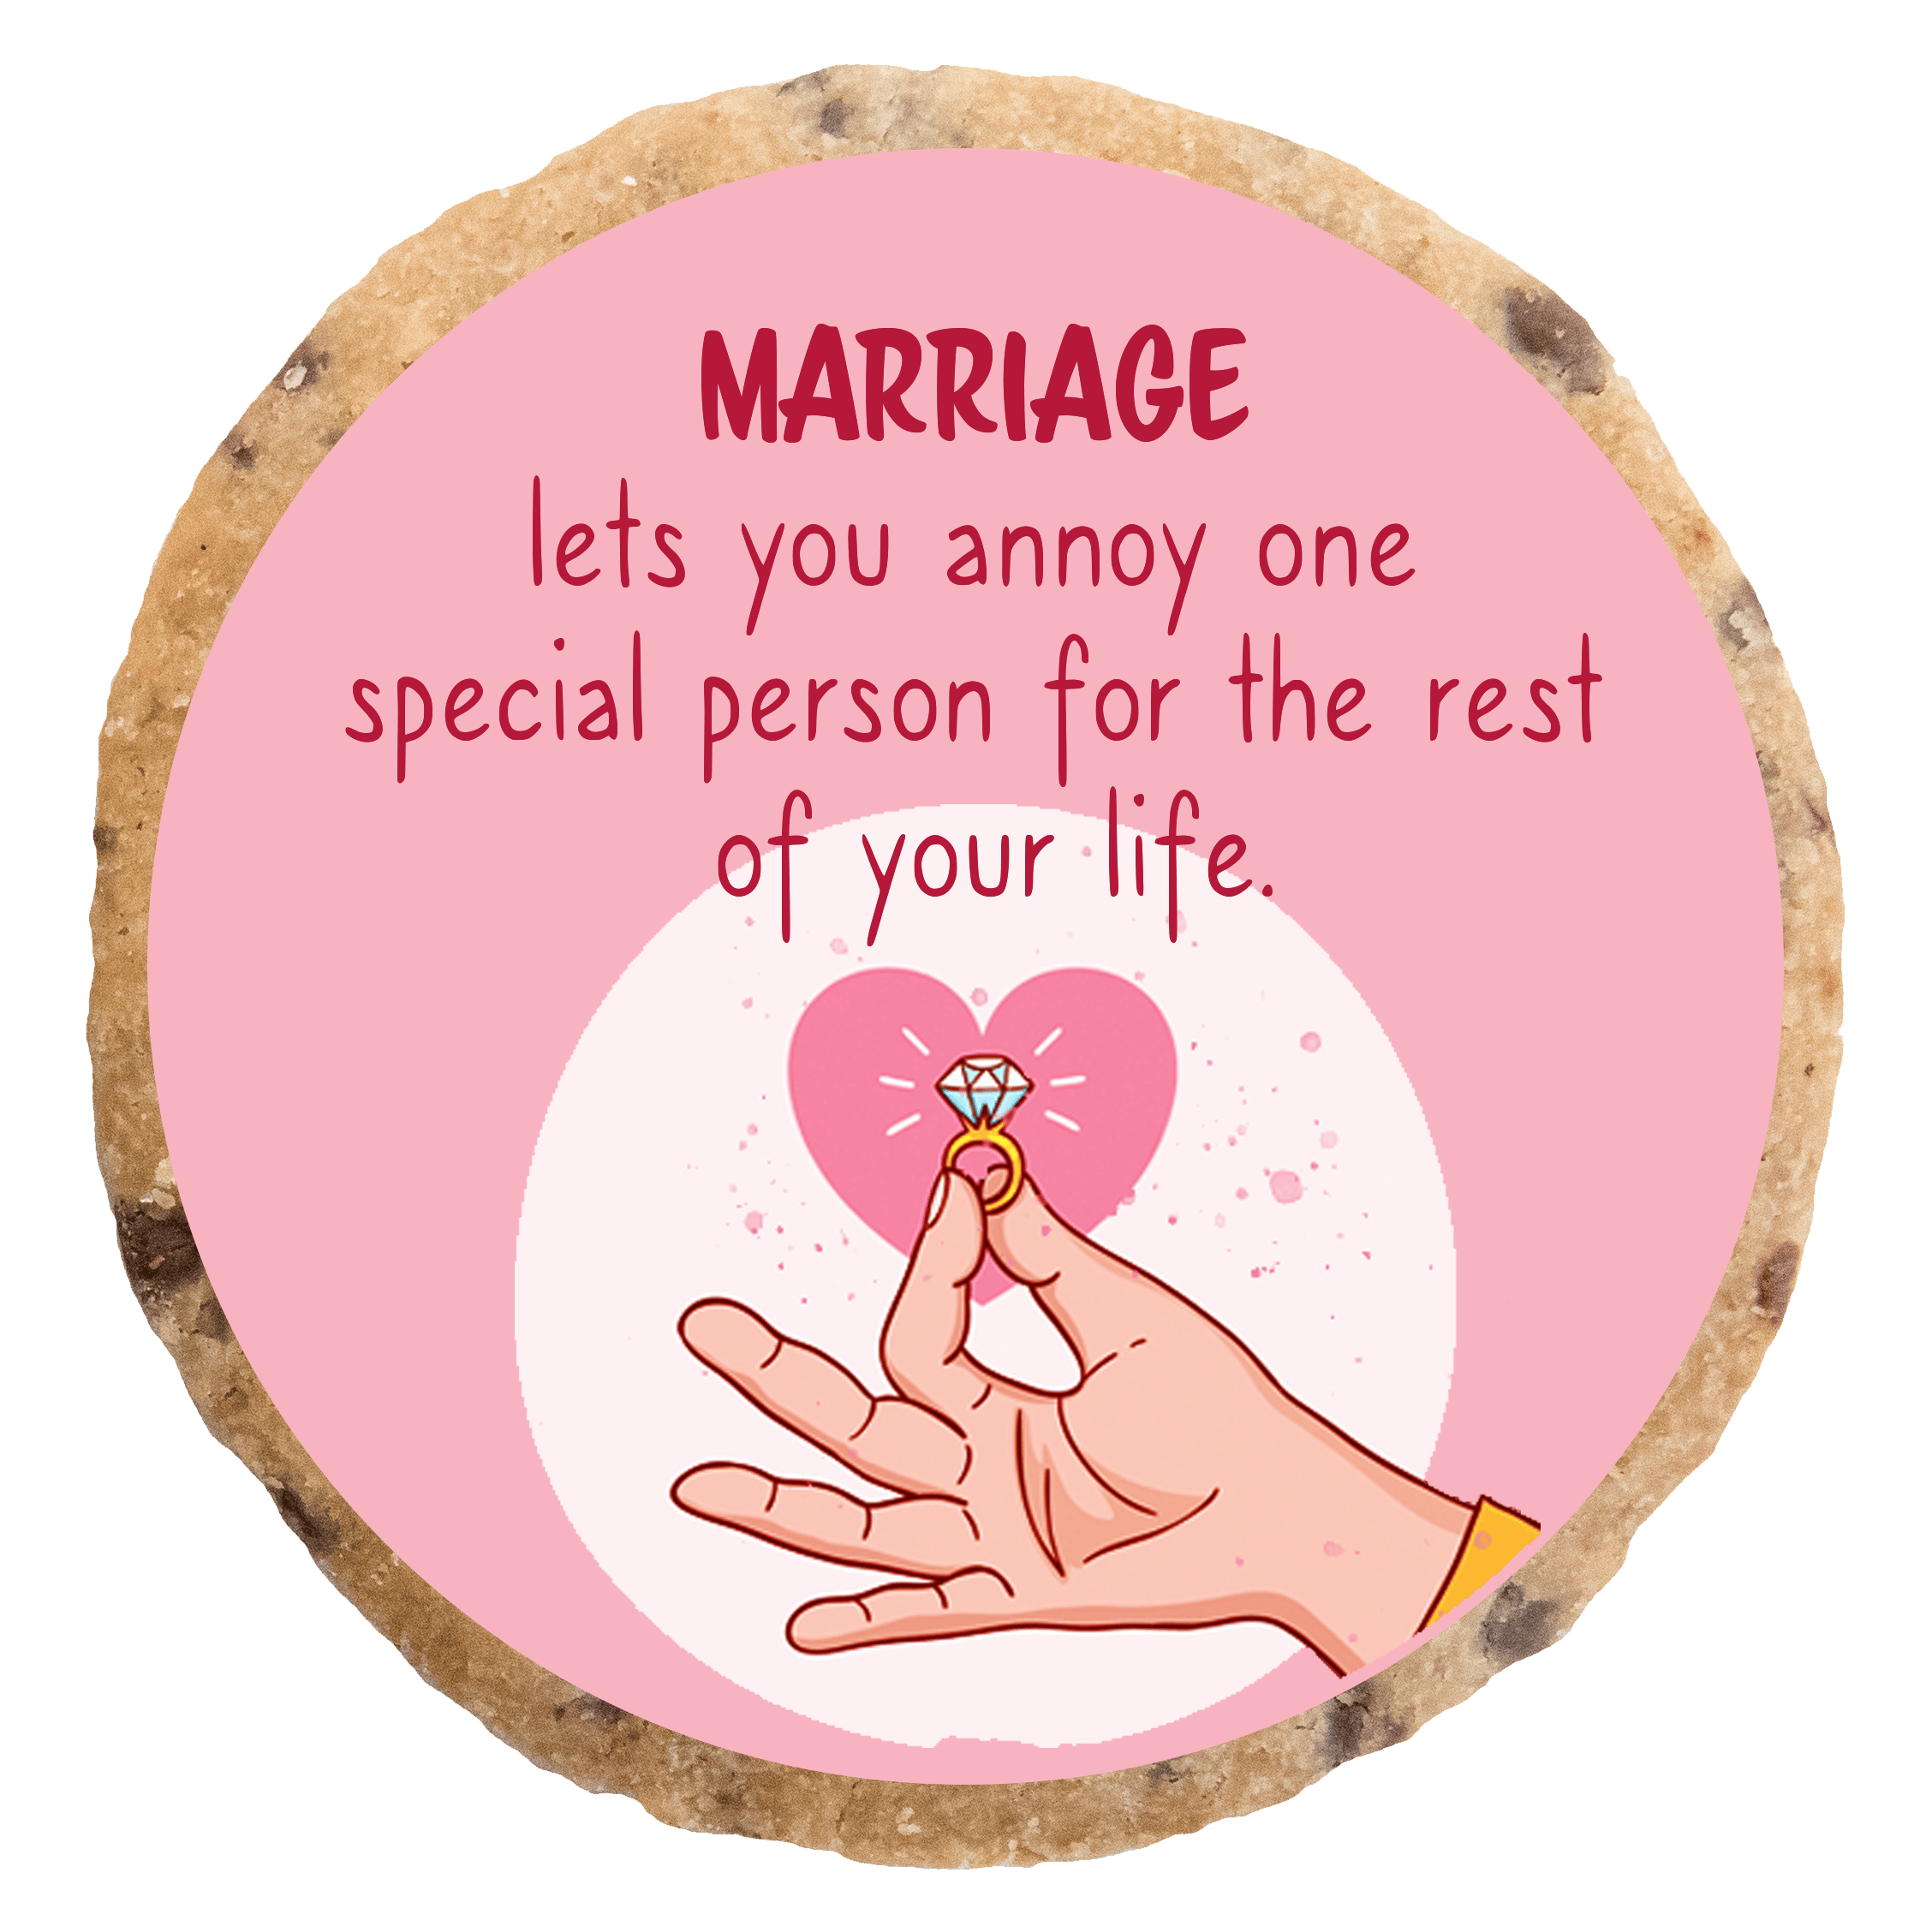 "Marriage lets you annoy" MotivKEKS